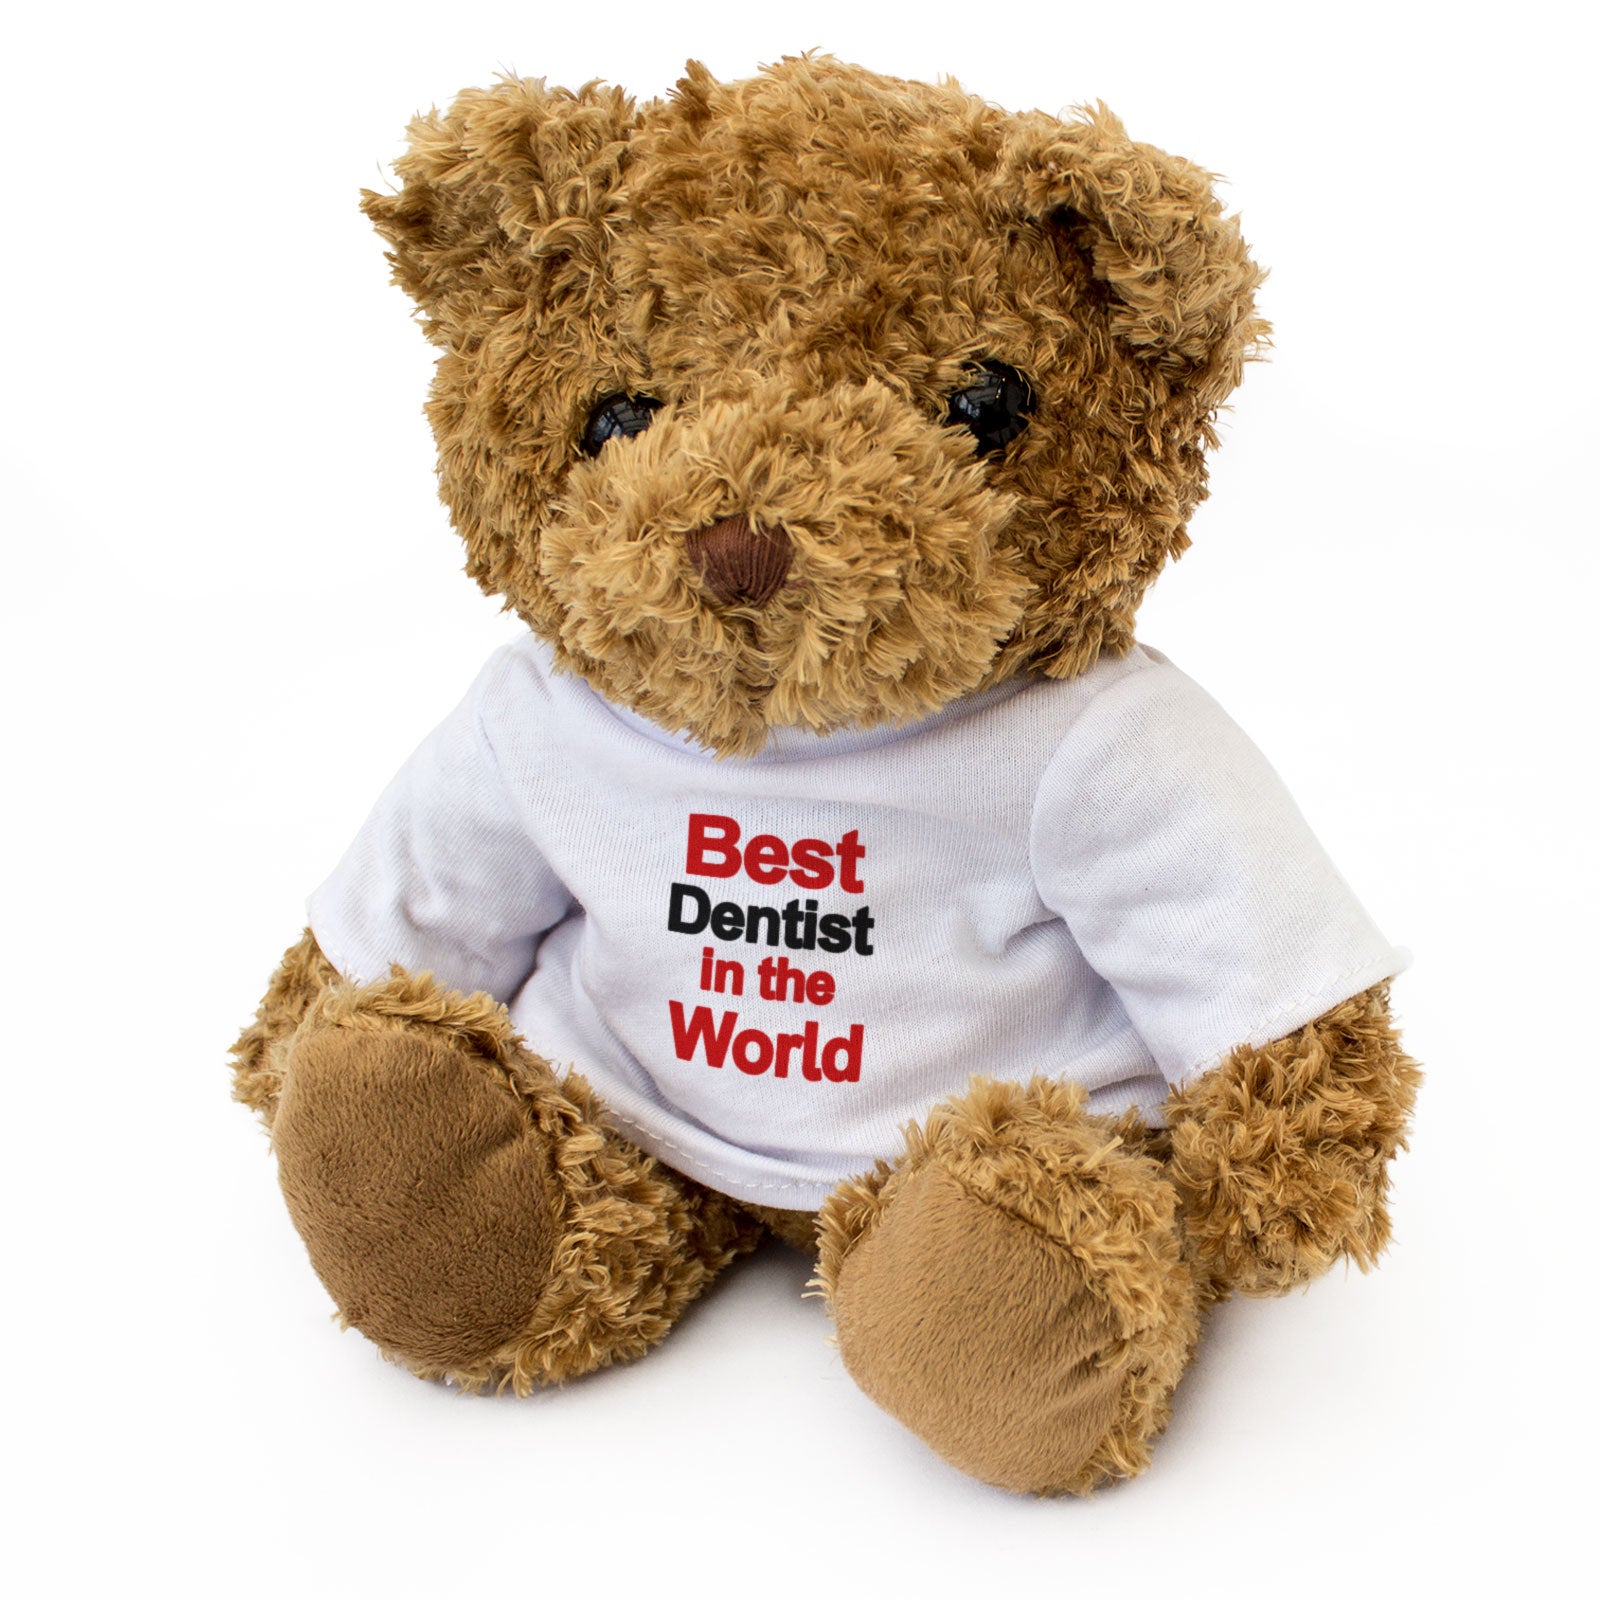 Best Dentist In The World Teddy Bear